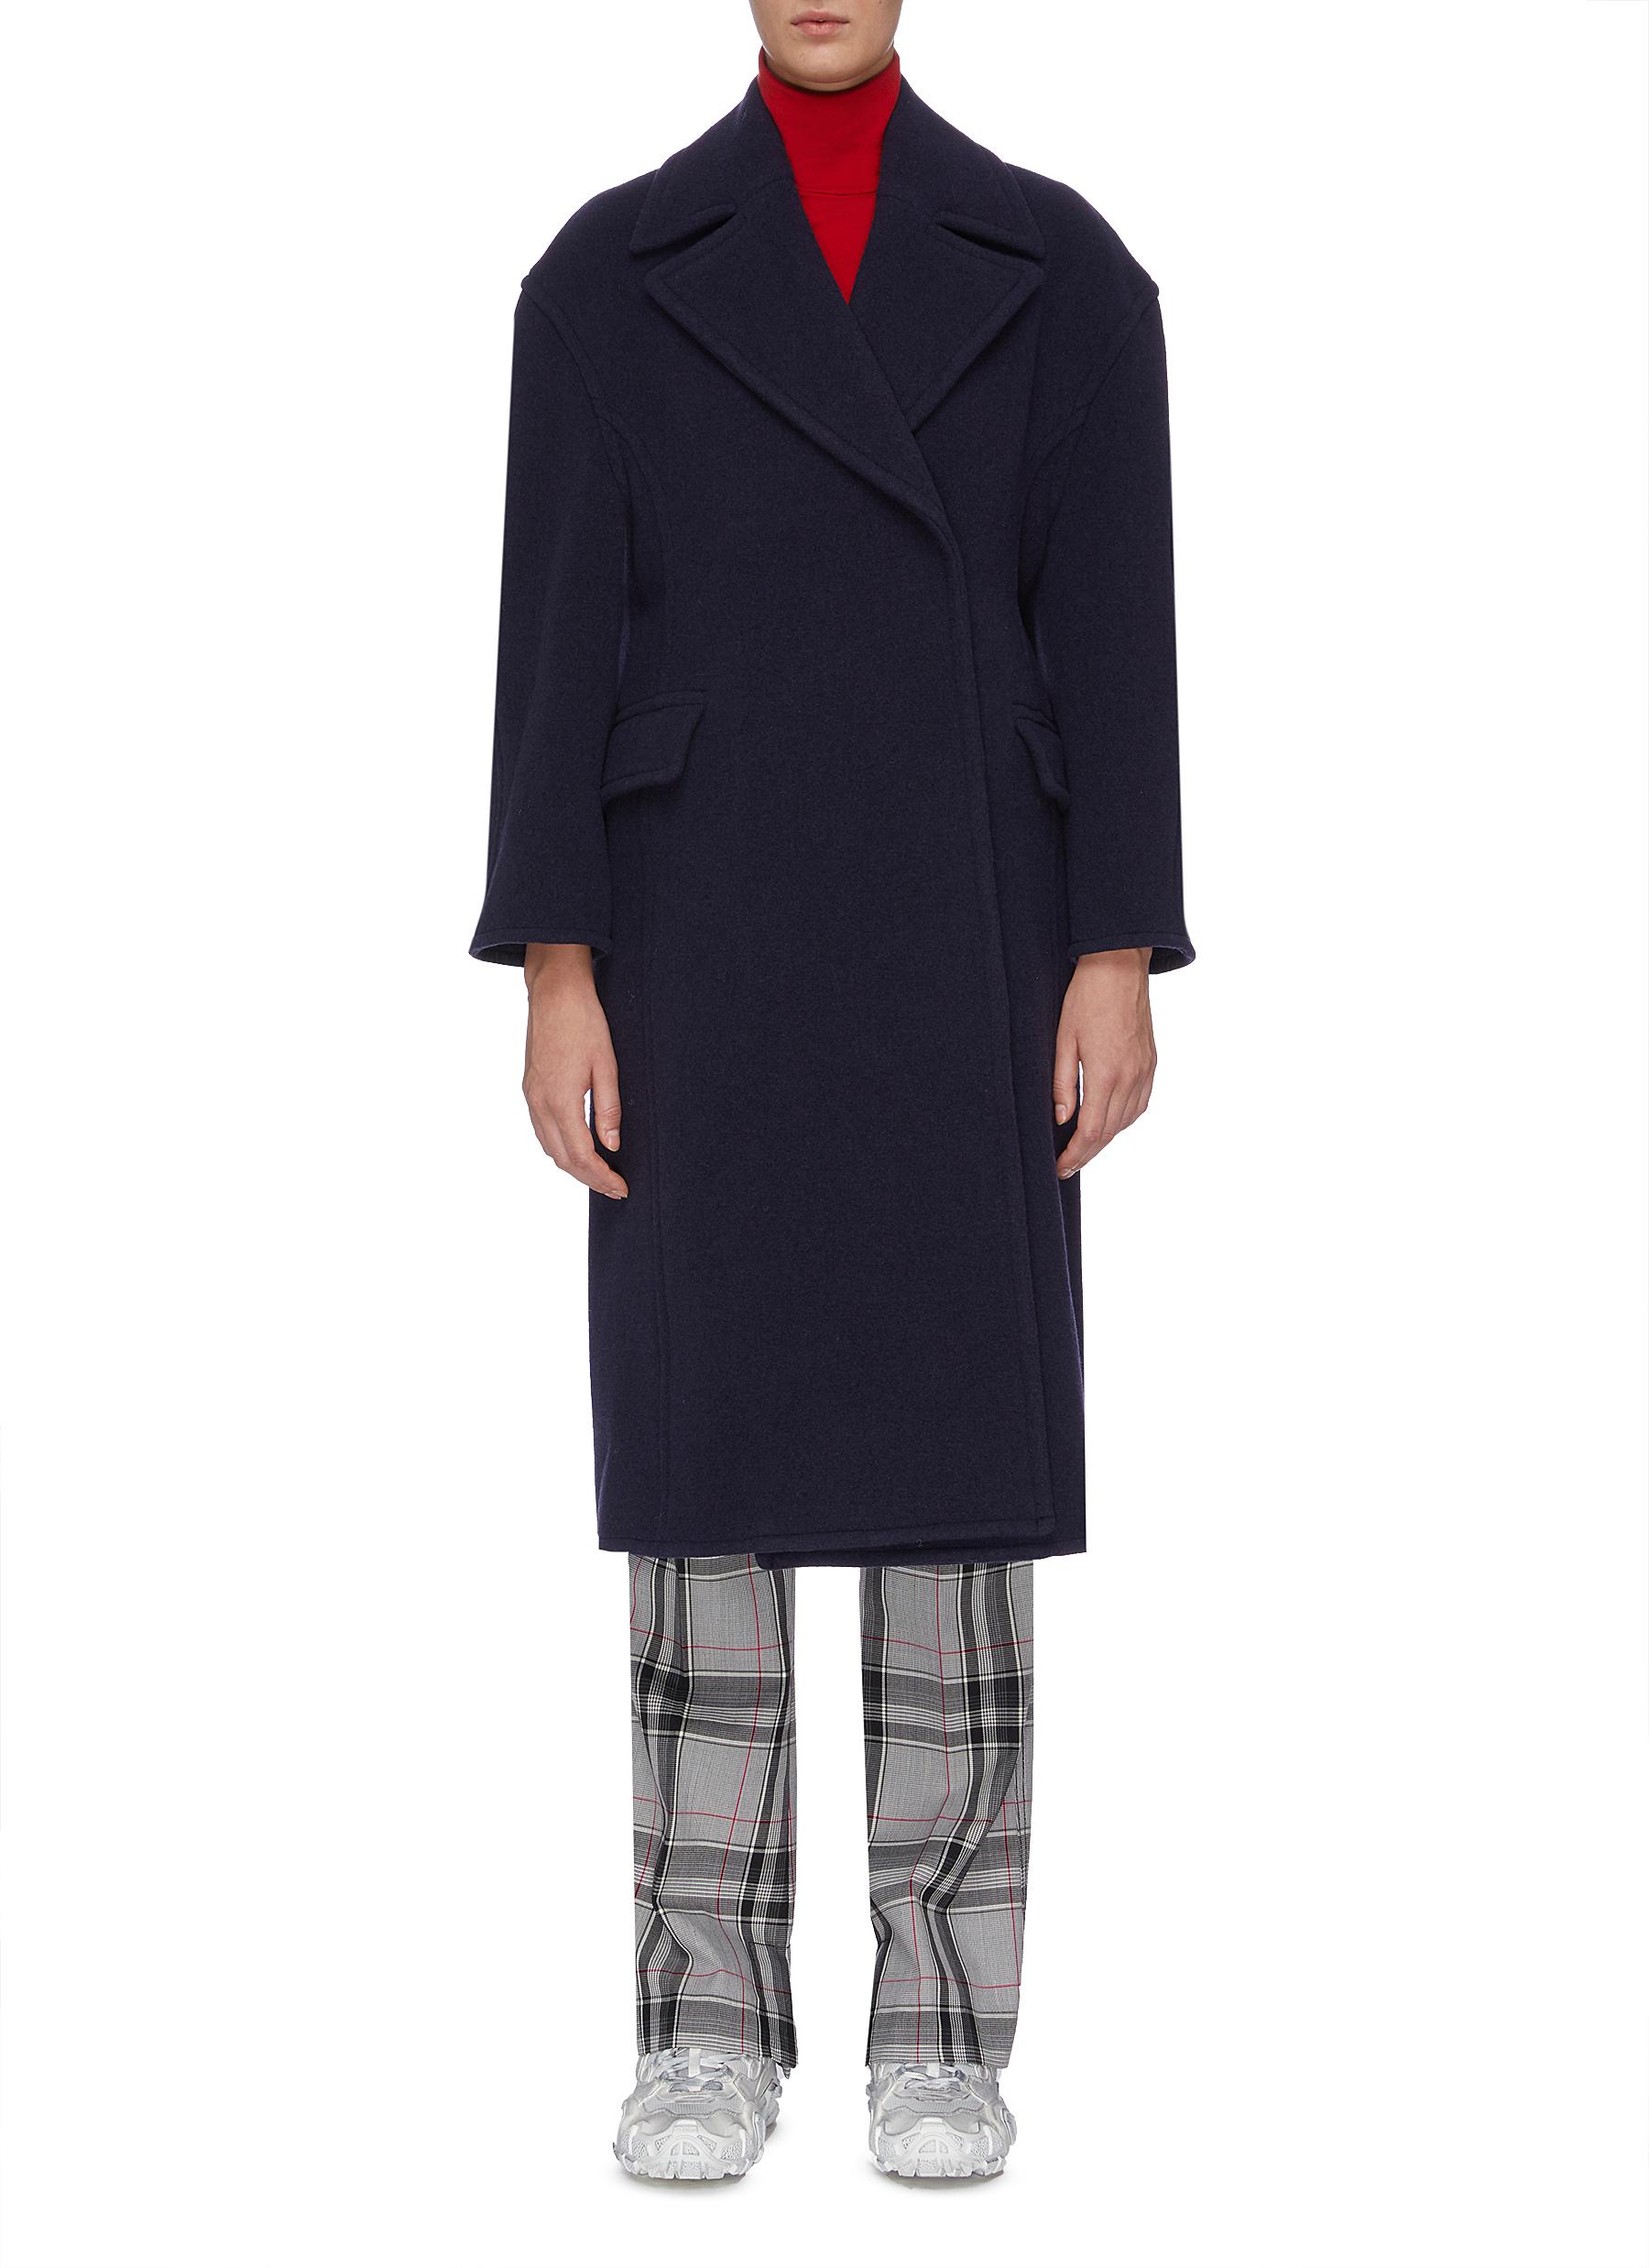 Wool-blend coat by Acne Studios | Coshio Online Shop